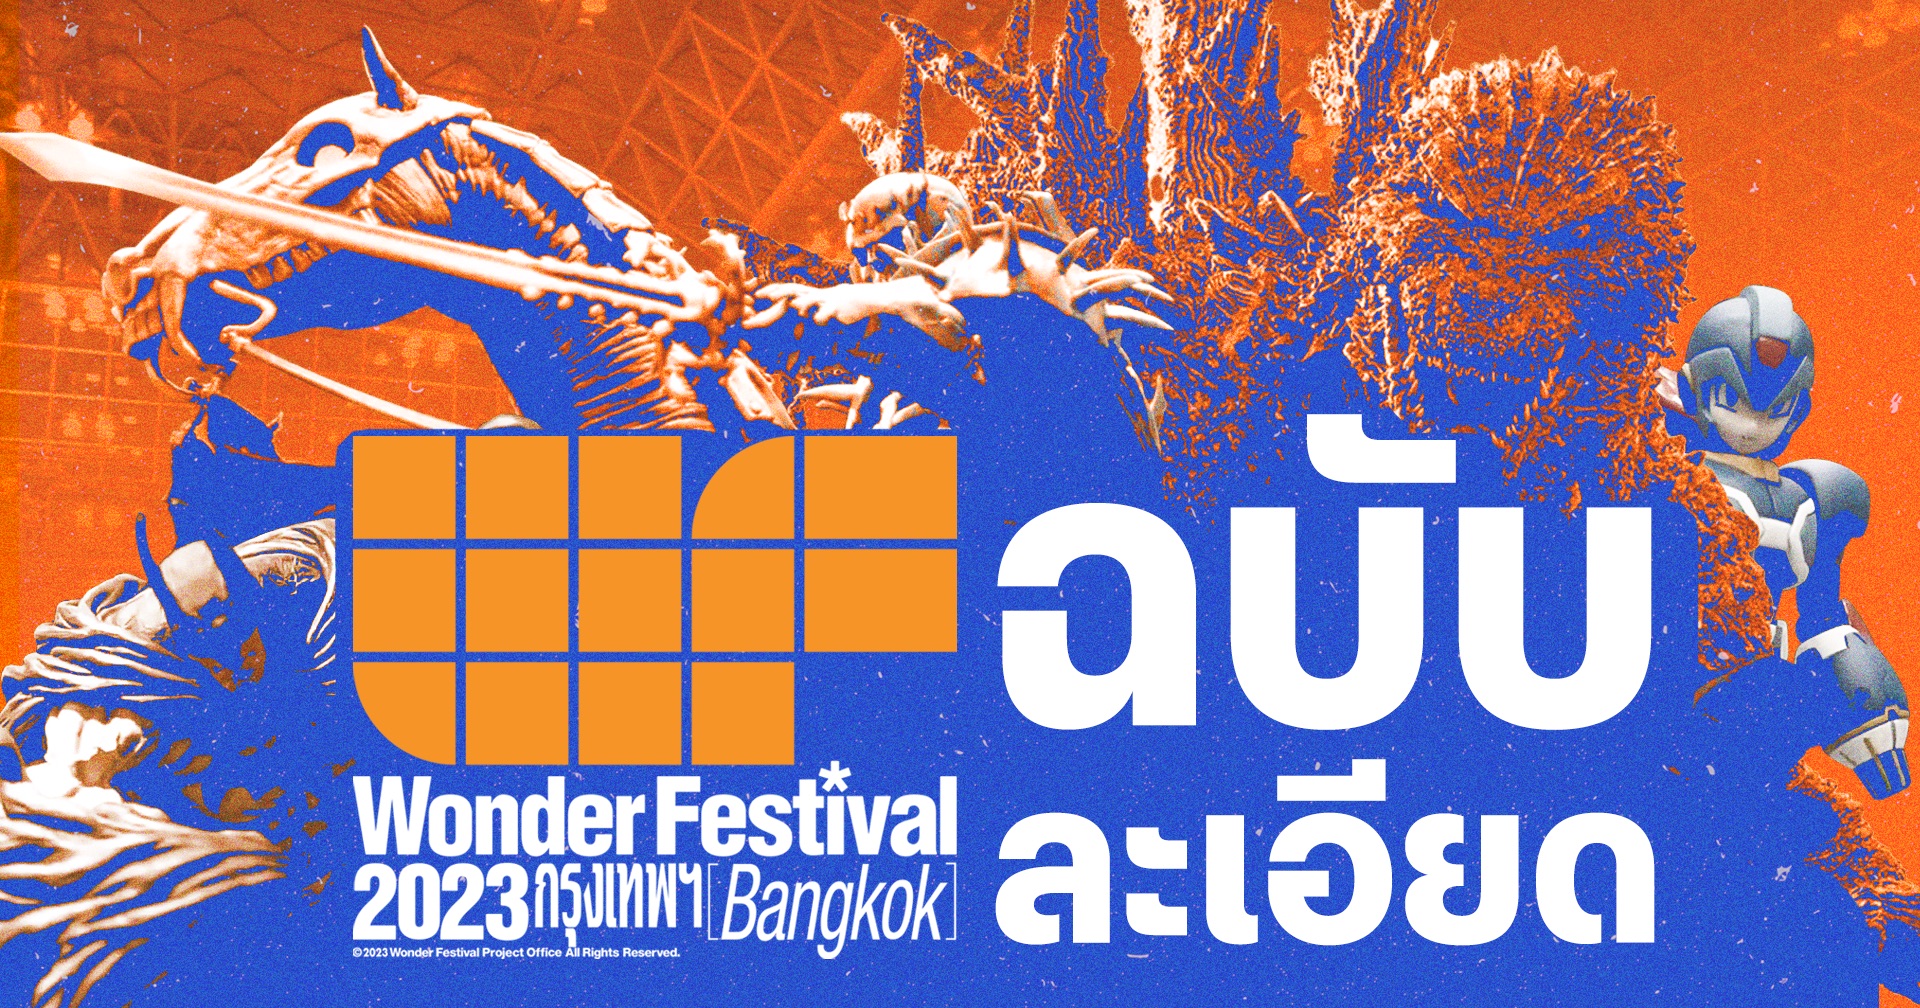 Wonder Festival ที่ร่วมกับ Thailand Game Show 2023: Assemble คืองานอะไร? ทำไมต้องมา!?